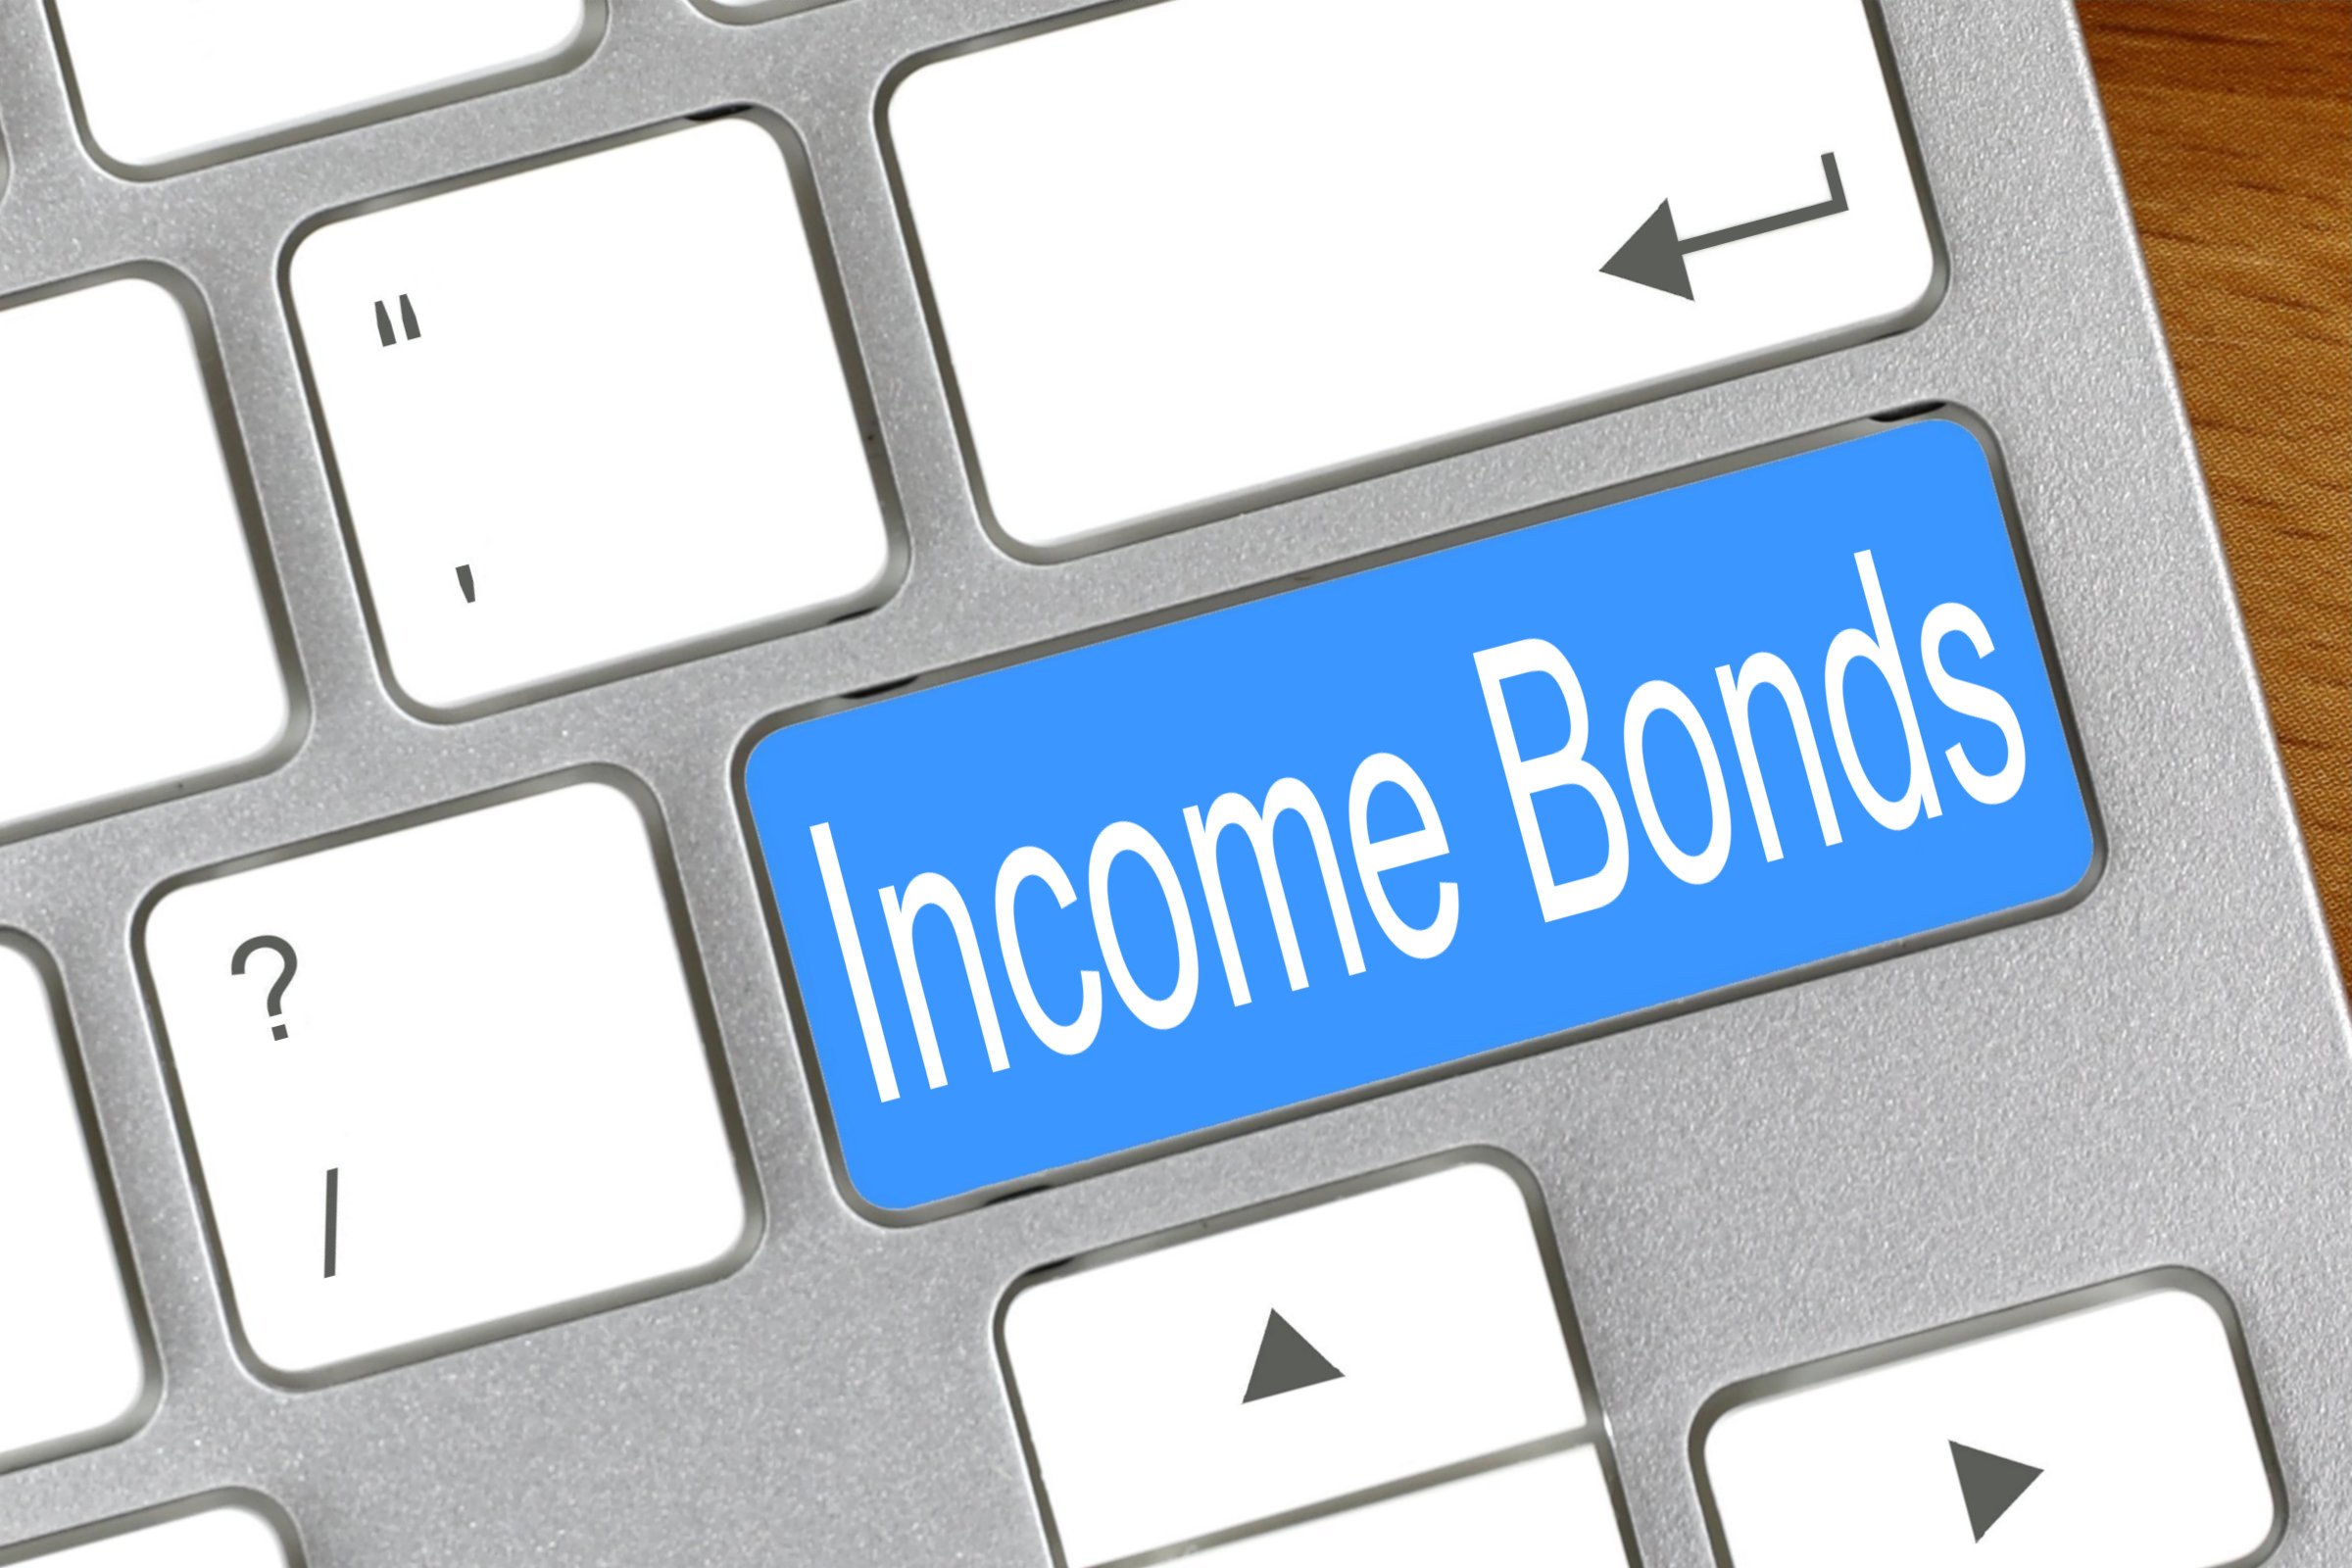 income bonds